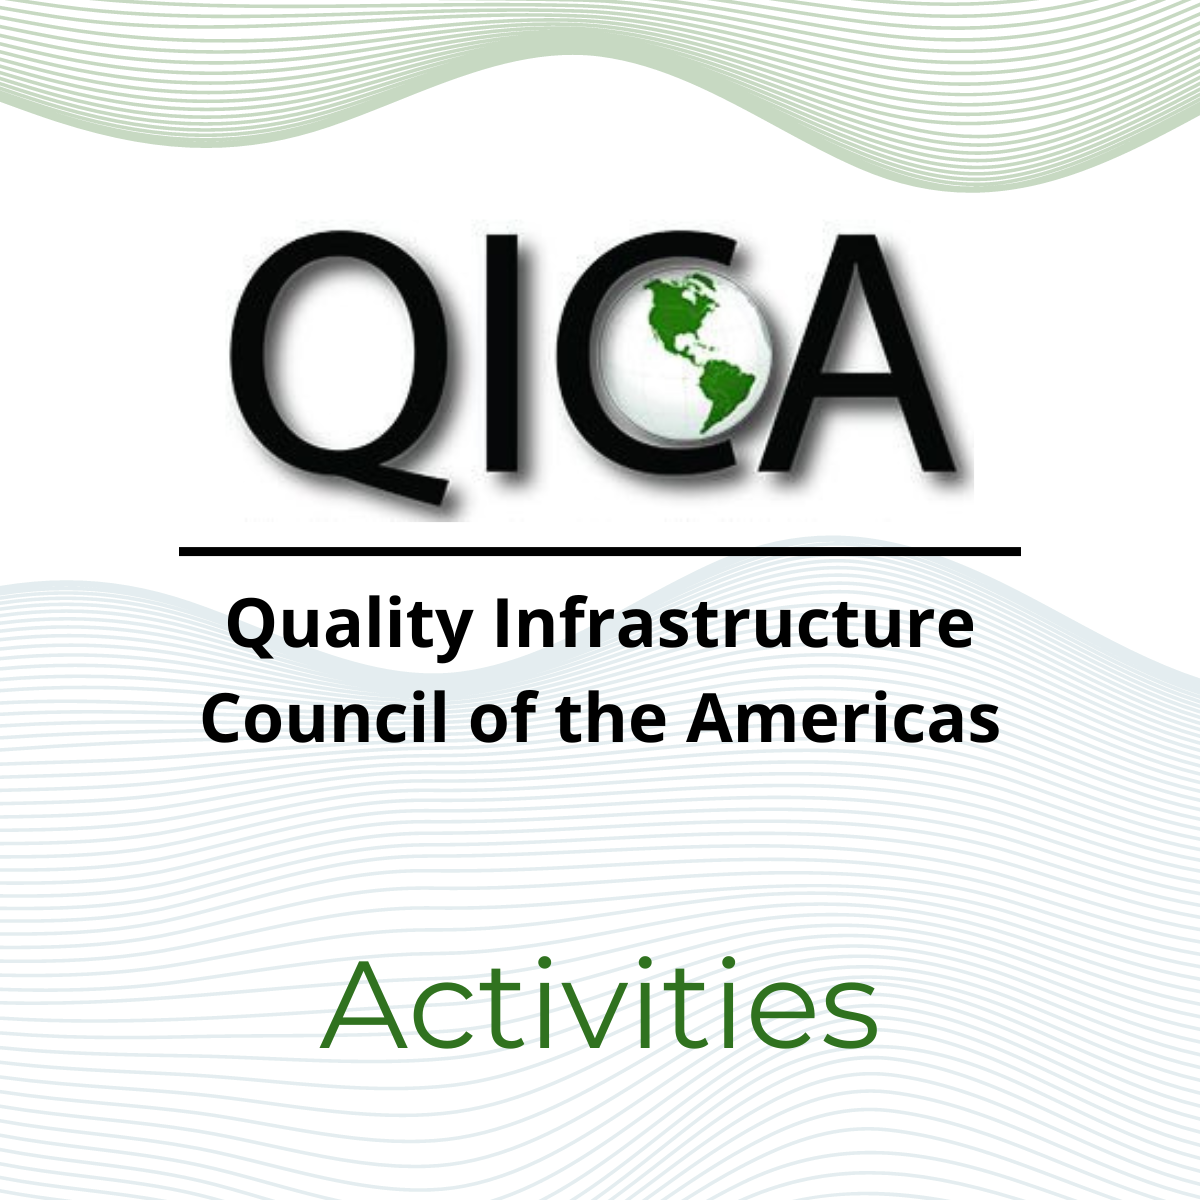 QICA's latest activities